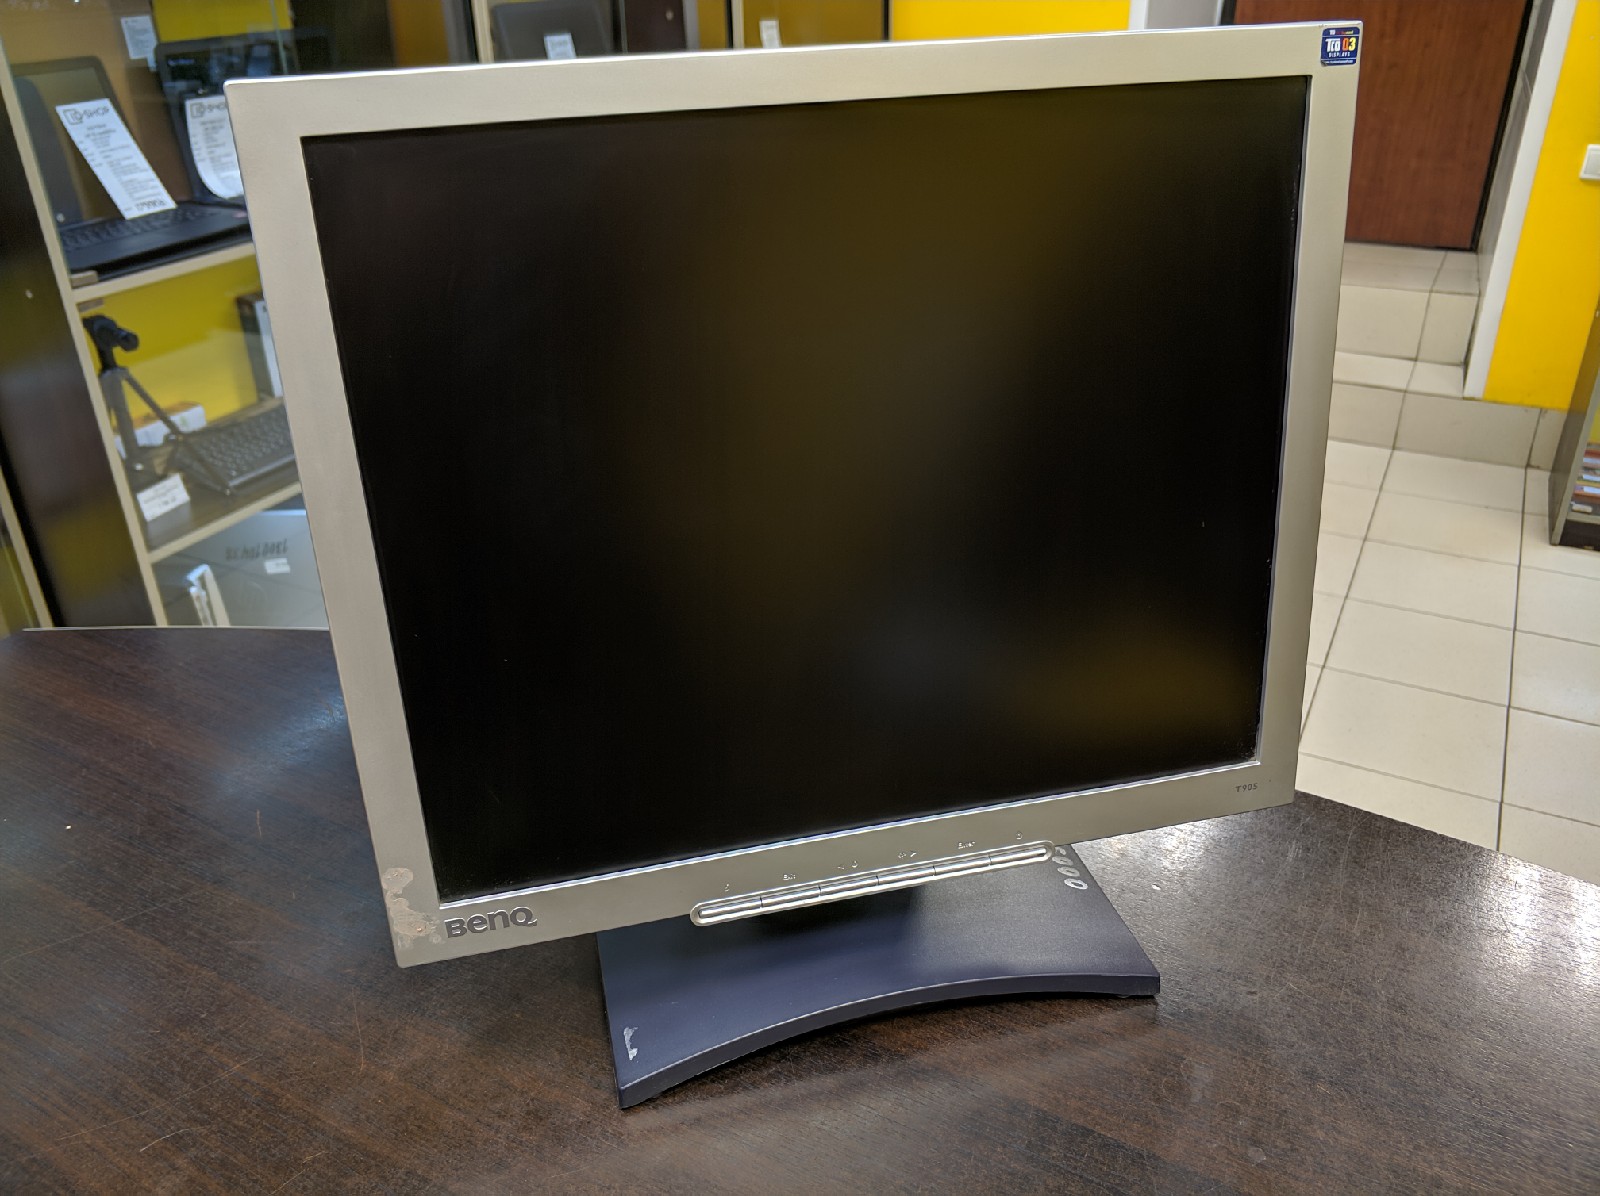 Schermo Monitor BenQ q9t4 LCD 19 pollici 270cd/m² 1280x1024 550:1 77hz Desktop 